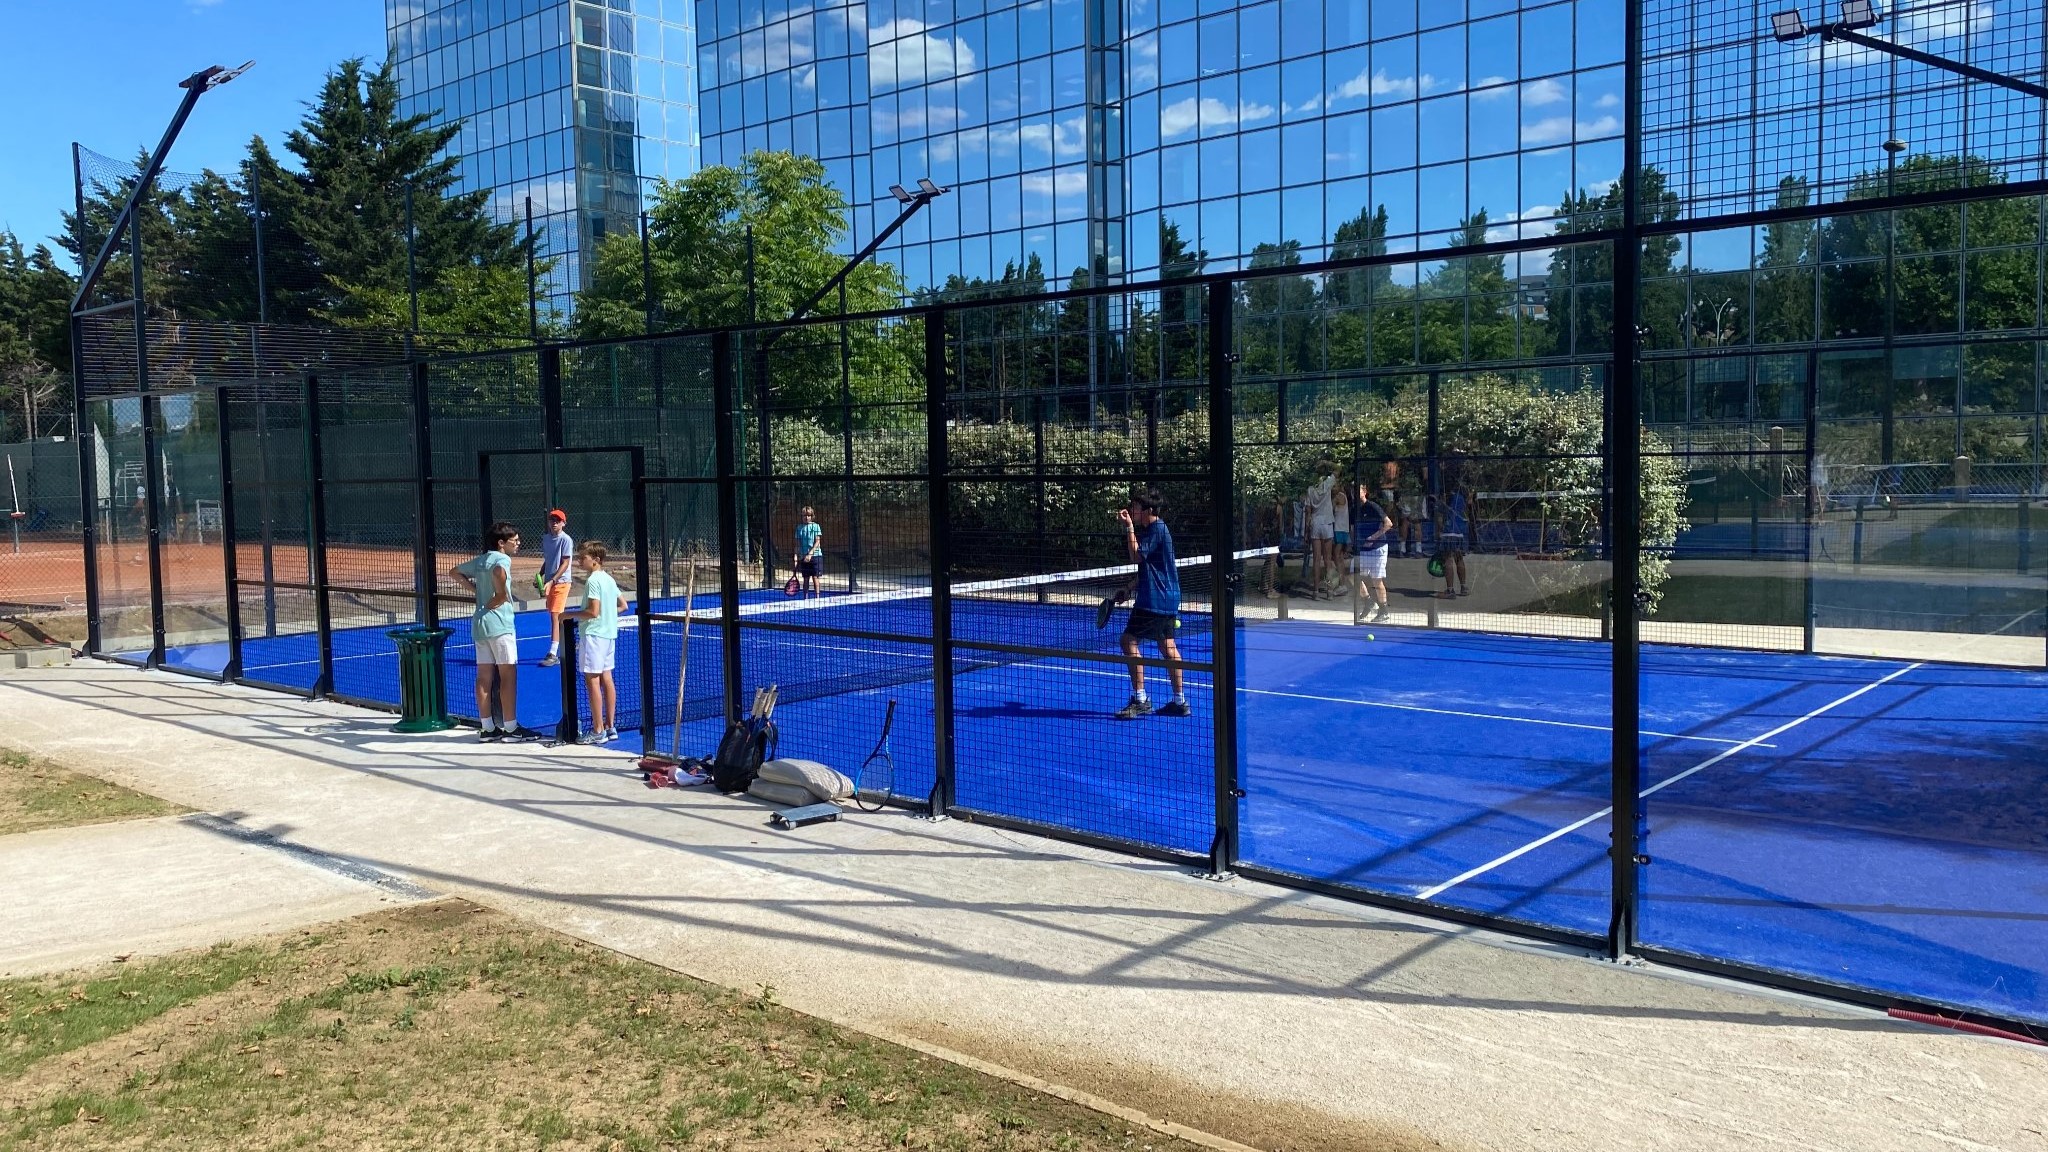 Tennis Club de Paris: two new courts in the heart of Paris